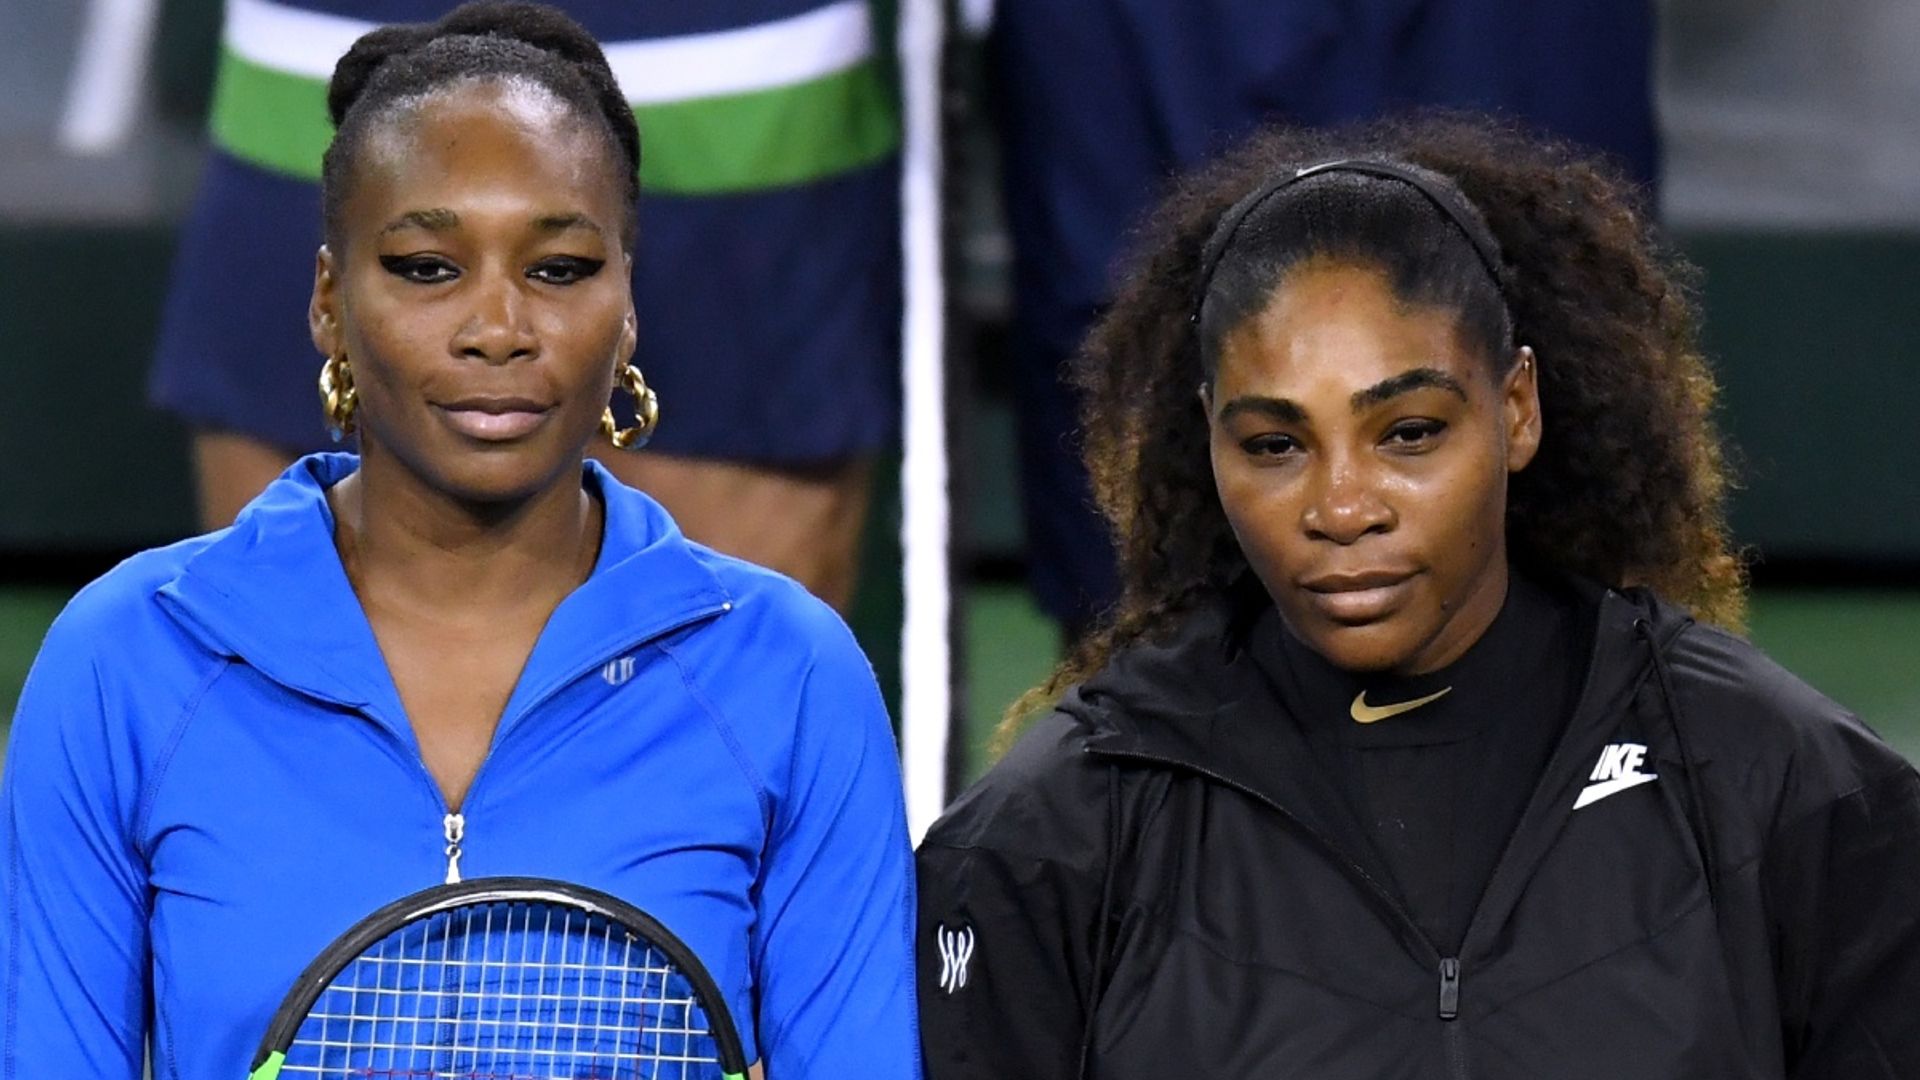 Serena Williams and her sister Venus praised for 'busting down doors'